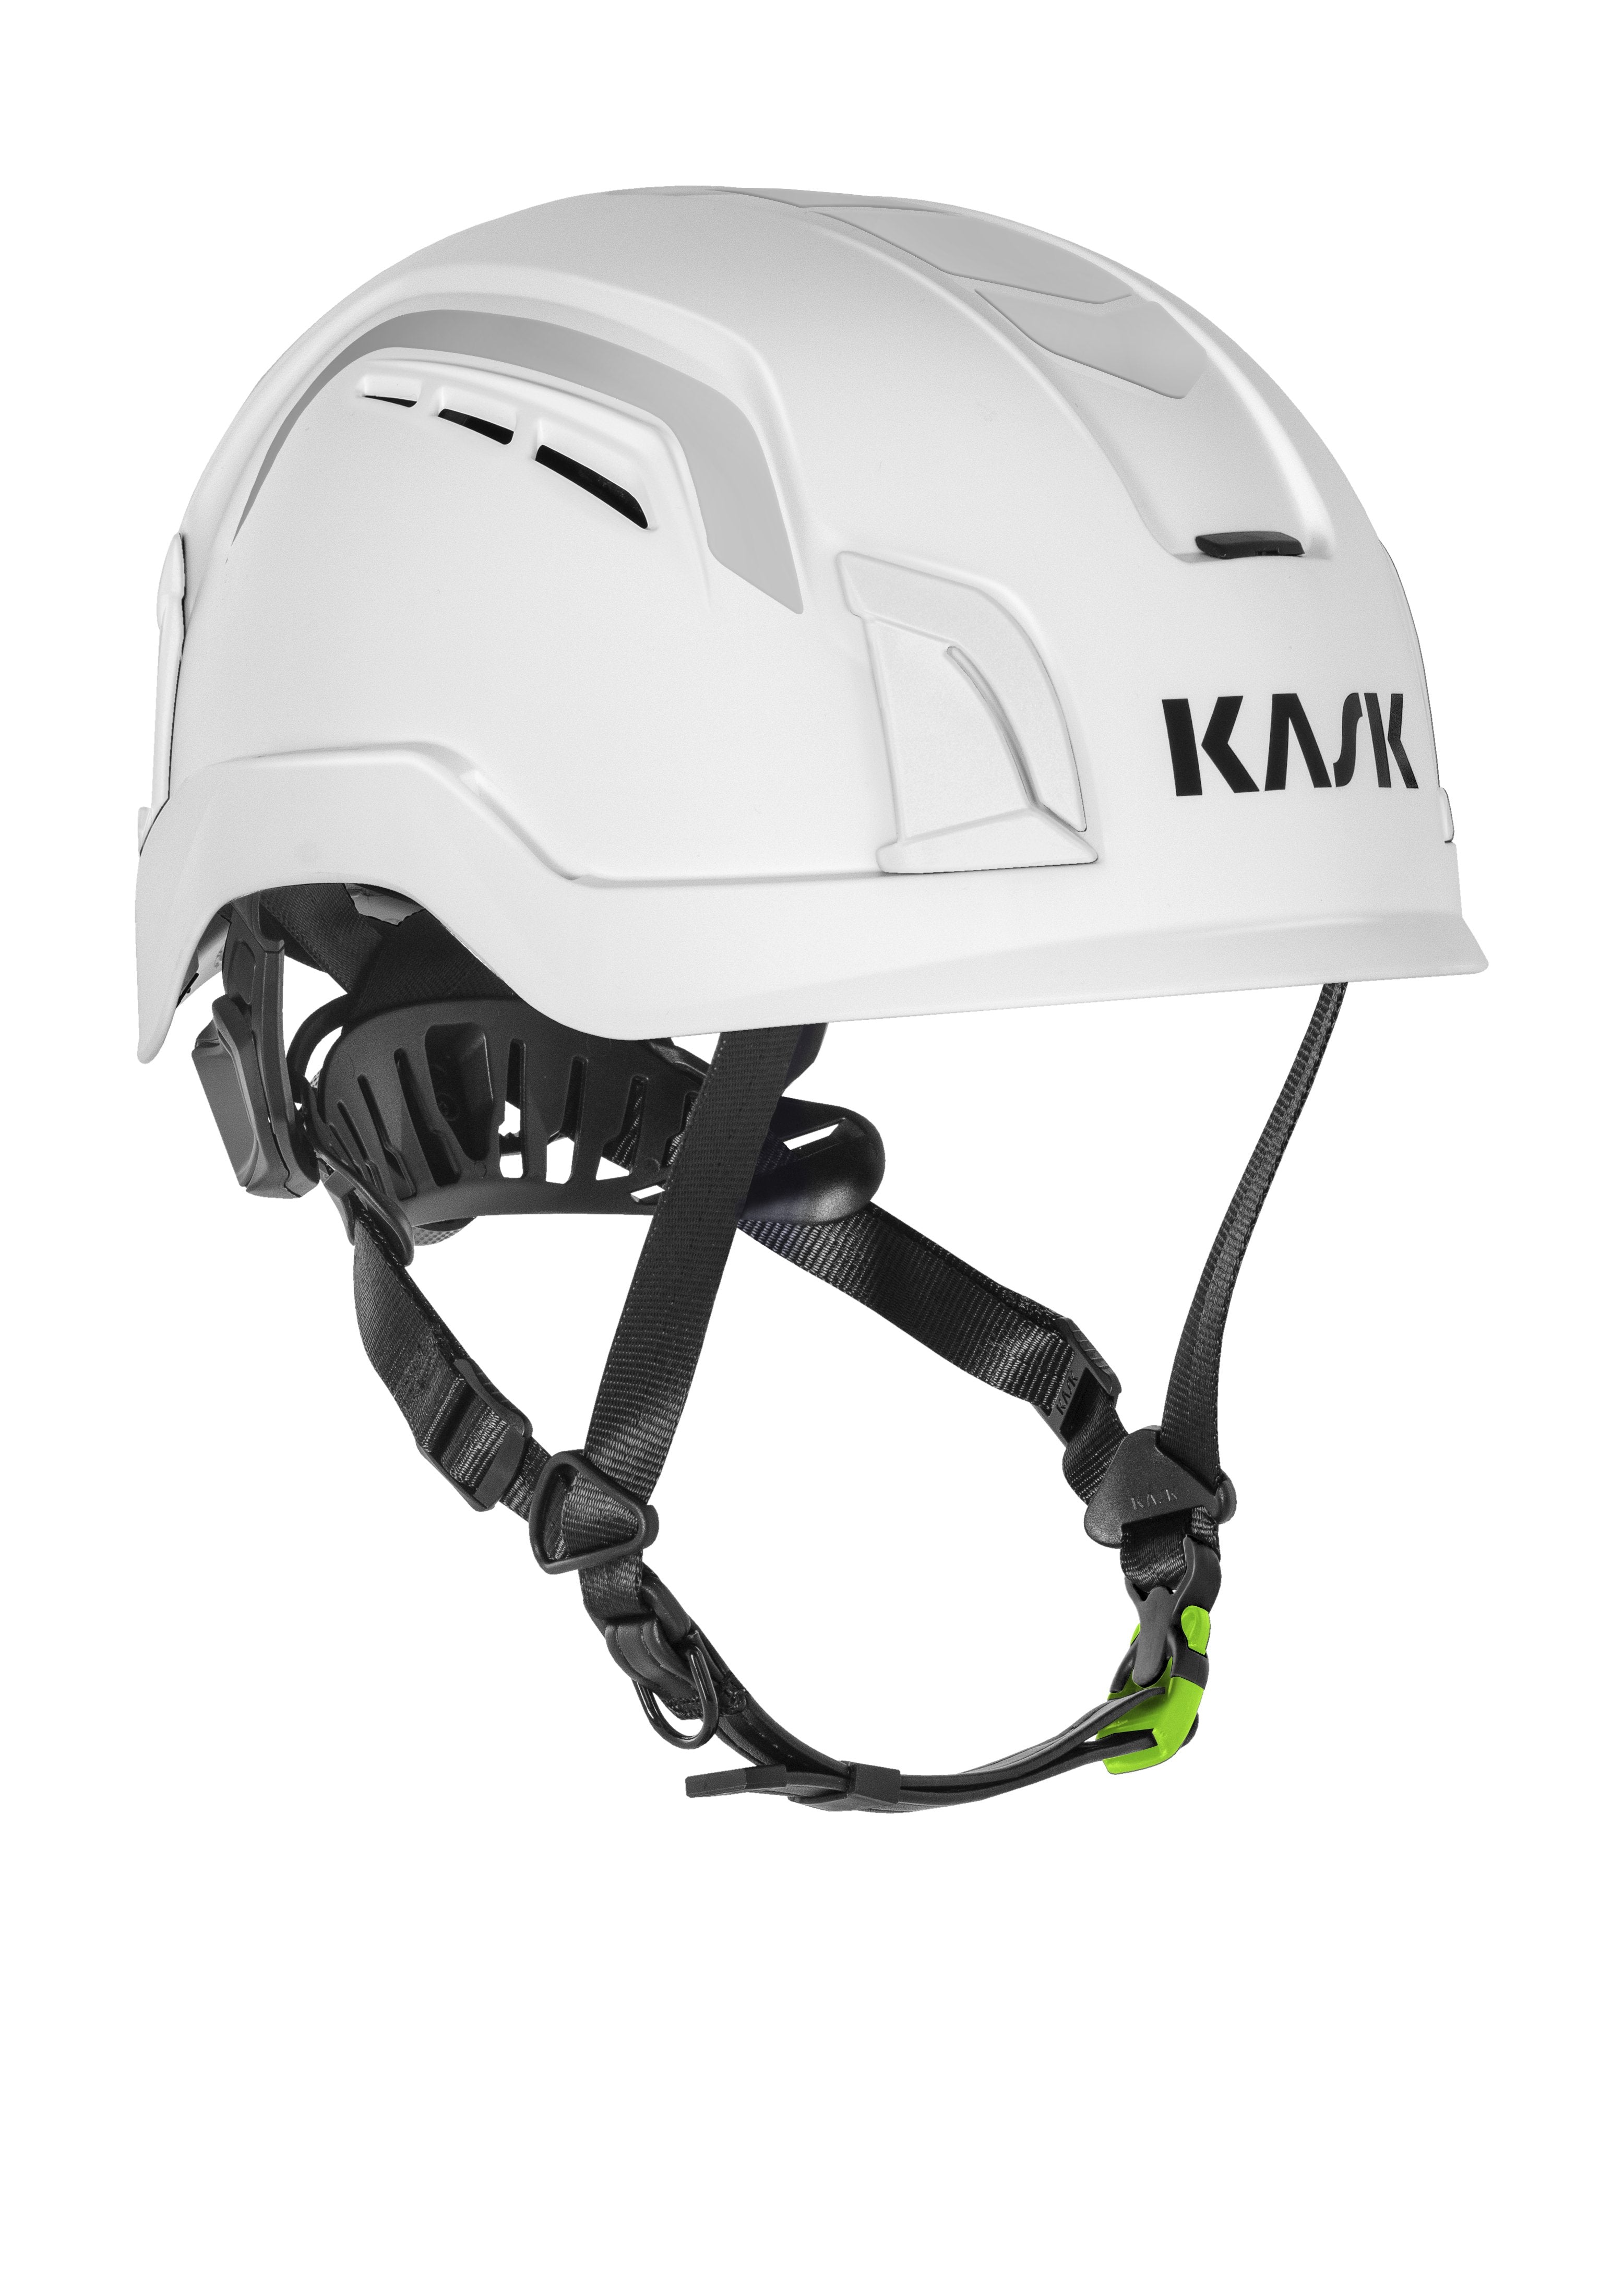 WHE00076 KASK Zenith X Air Hi-Vis Helmet